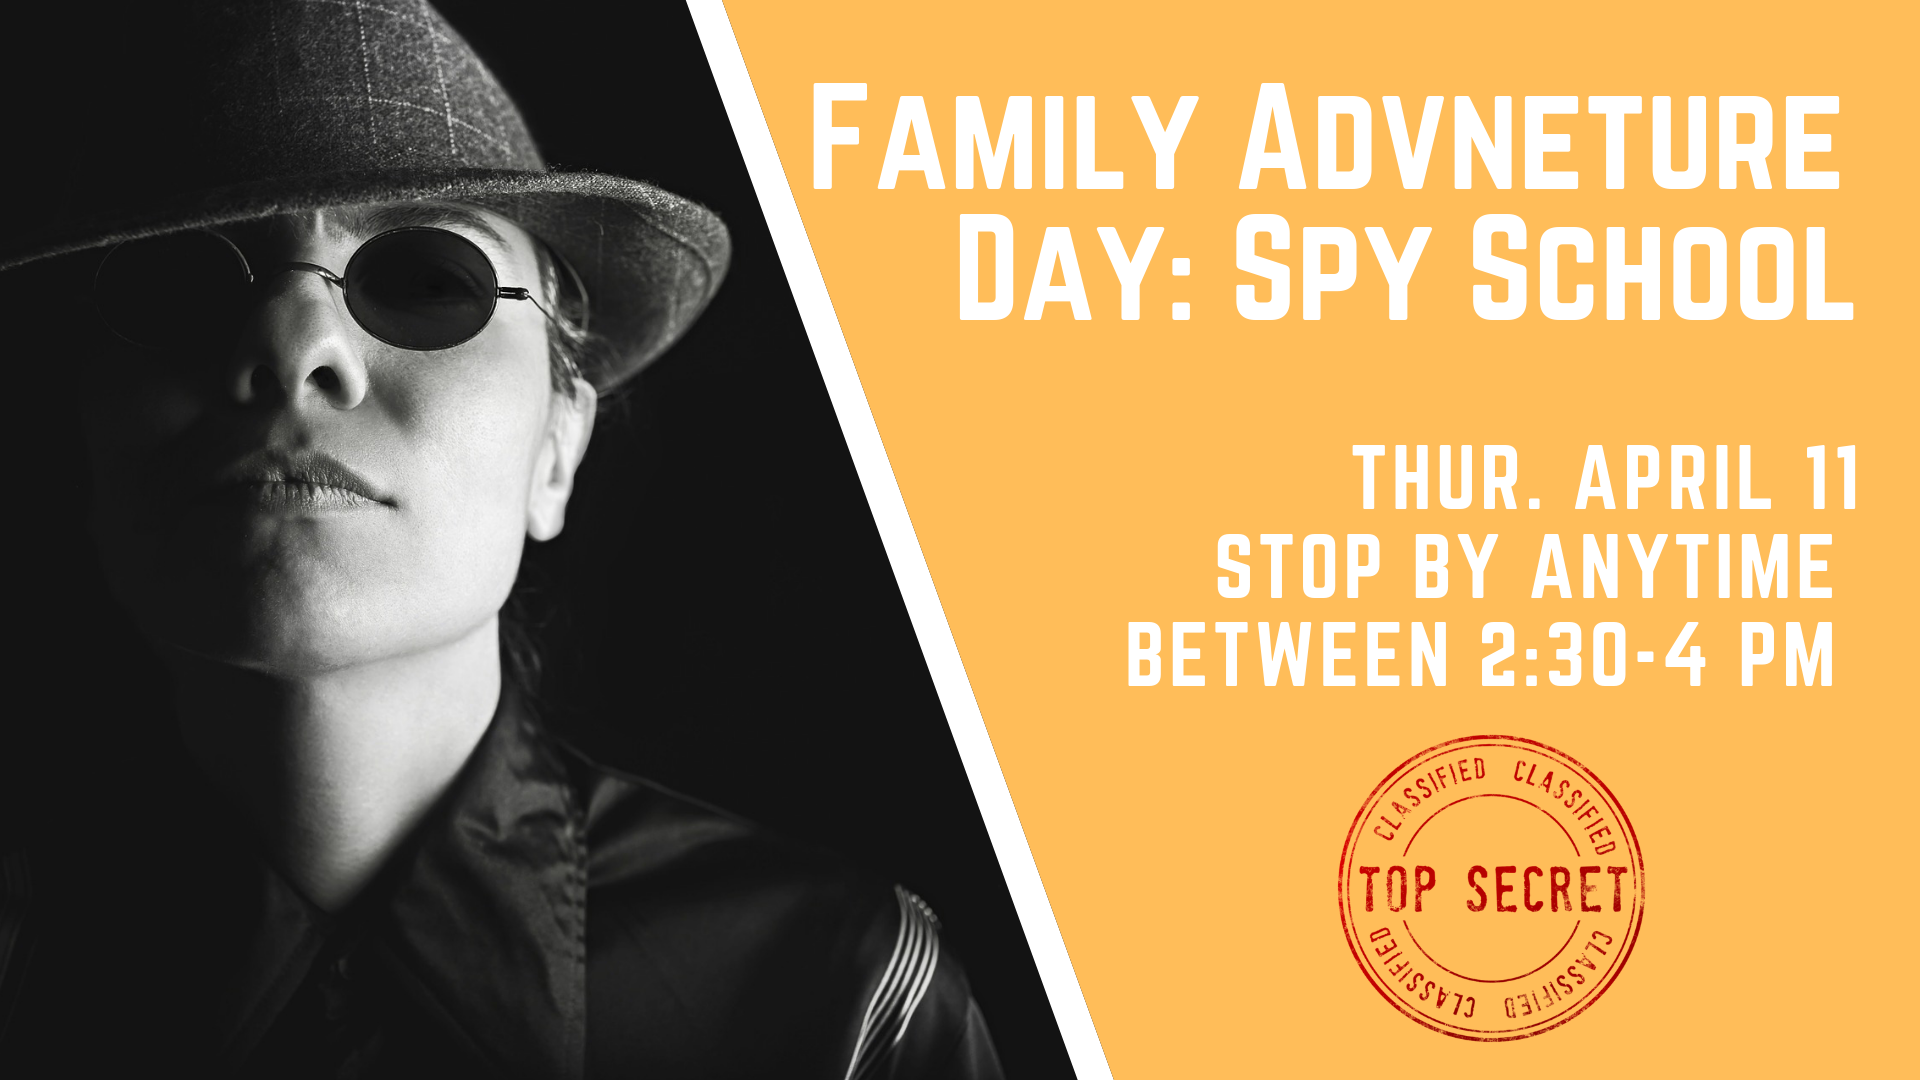 Family Adventure Day: Spy School flyer